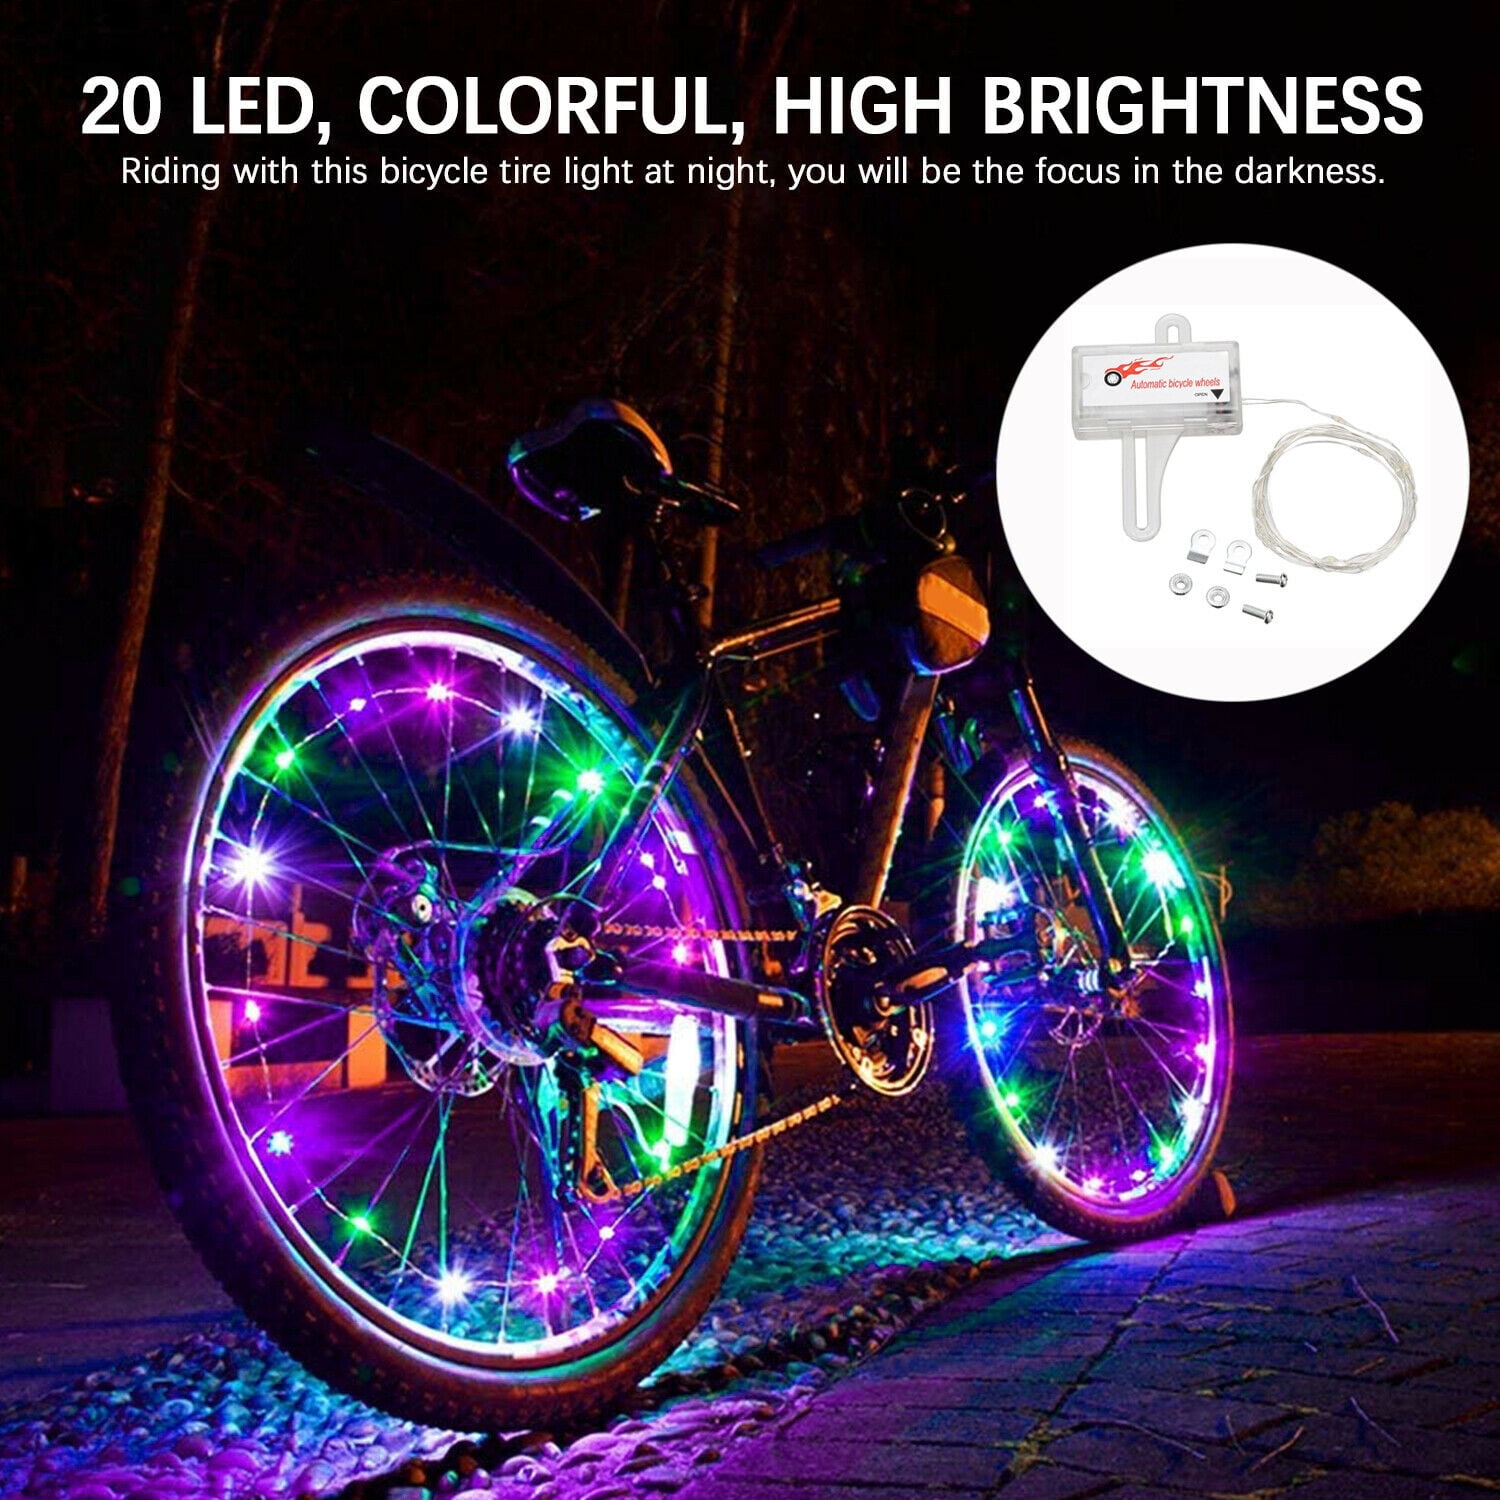 20 LED Bicycle Bike Cycling Rim String Lights Auto Open & Close Wheel Spoke Lamp 